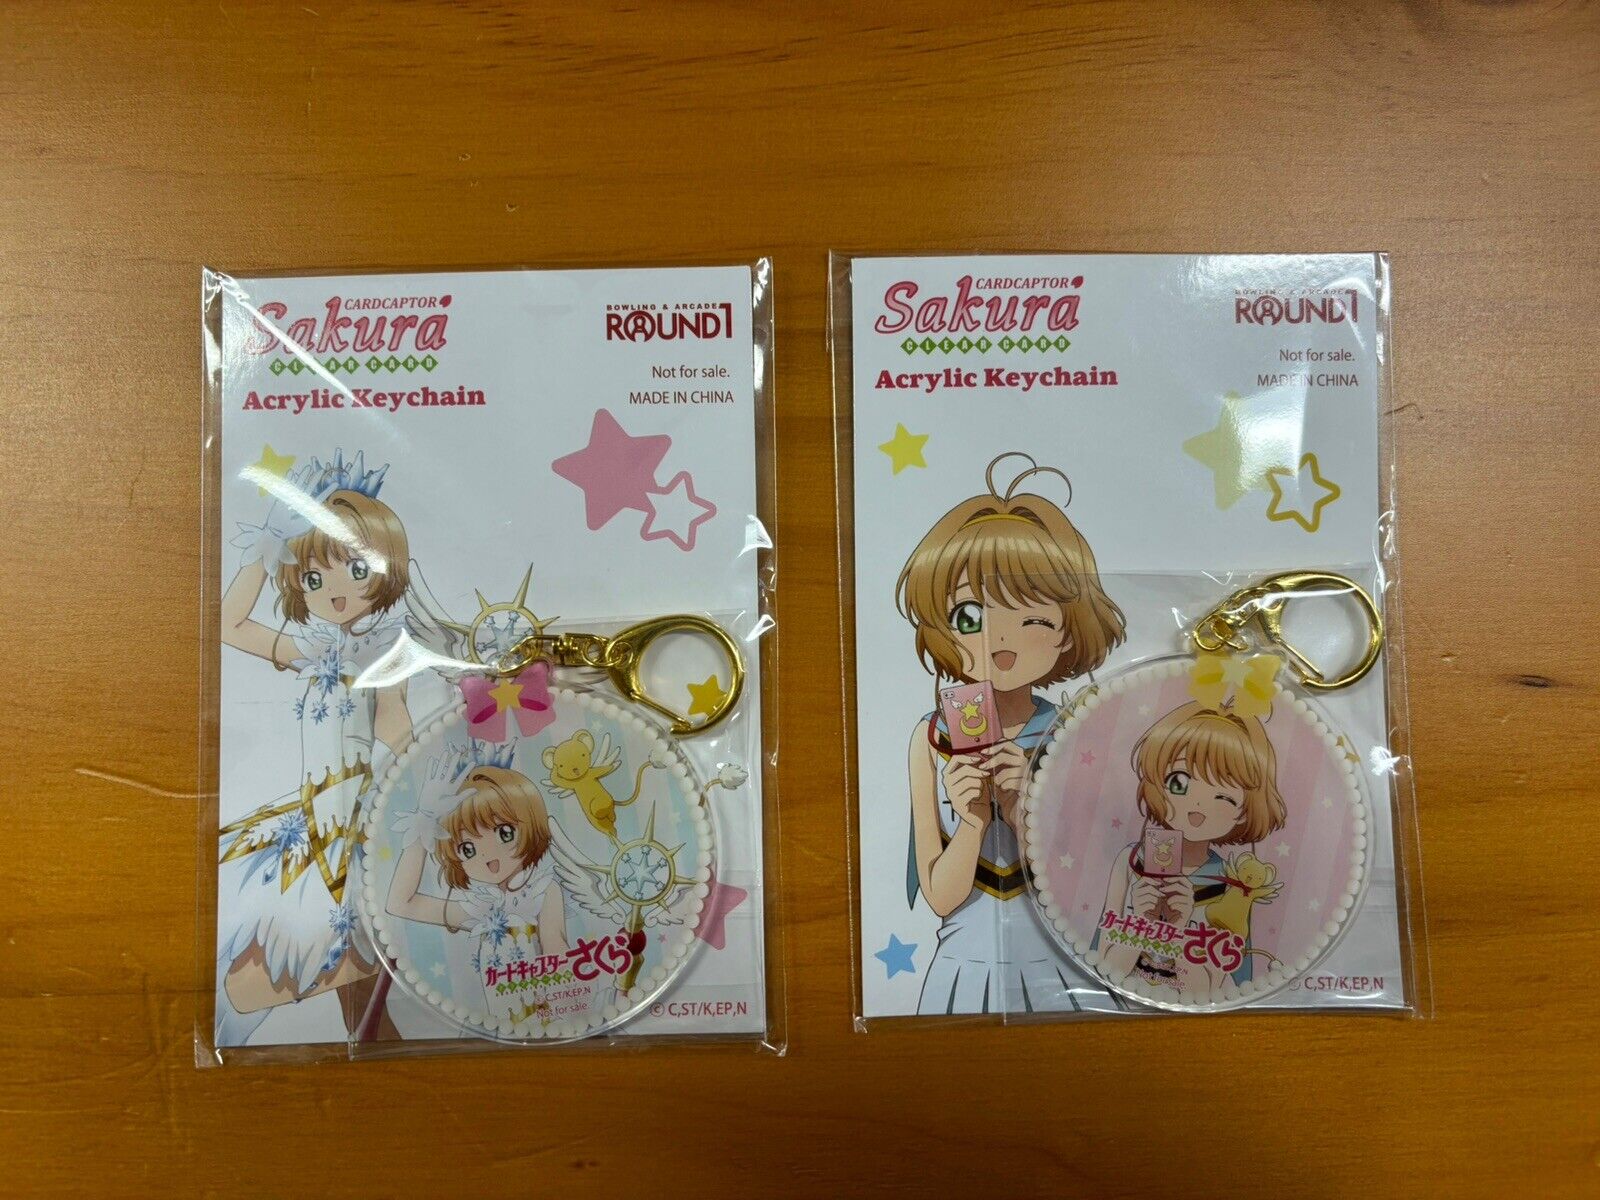 Cardcaptor Sakura Clear Card Round 1 Arcade Exclusive Acrylic Keychain Set